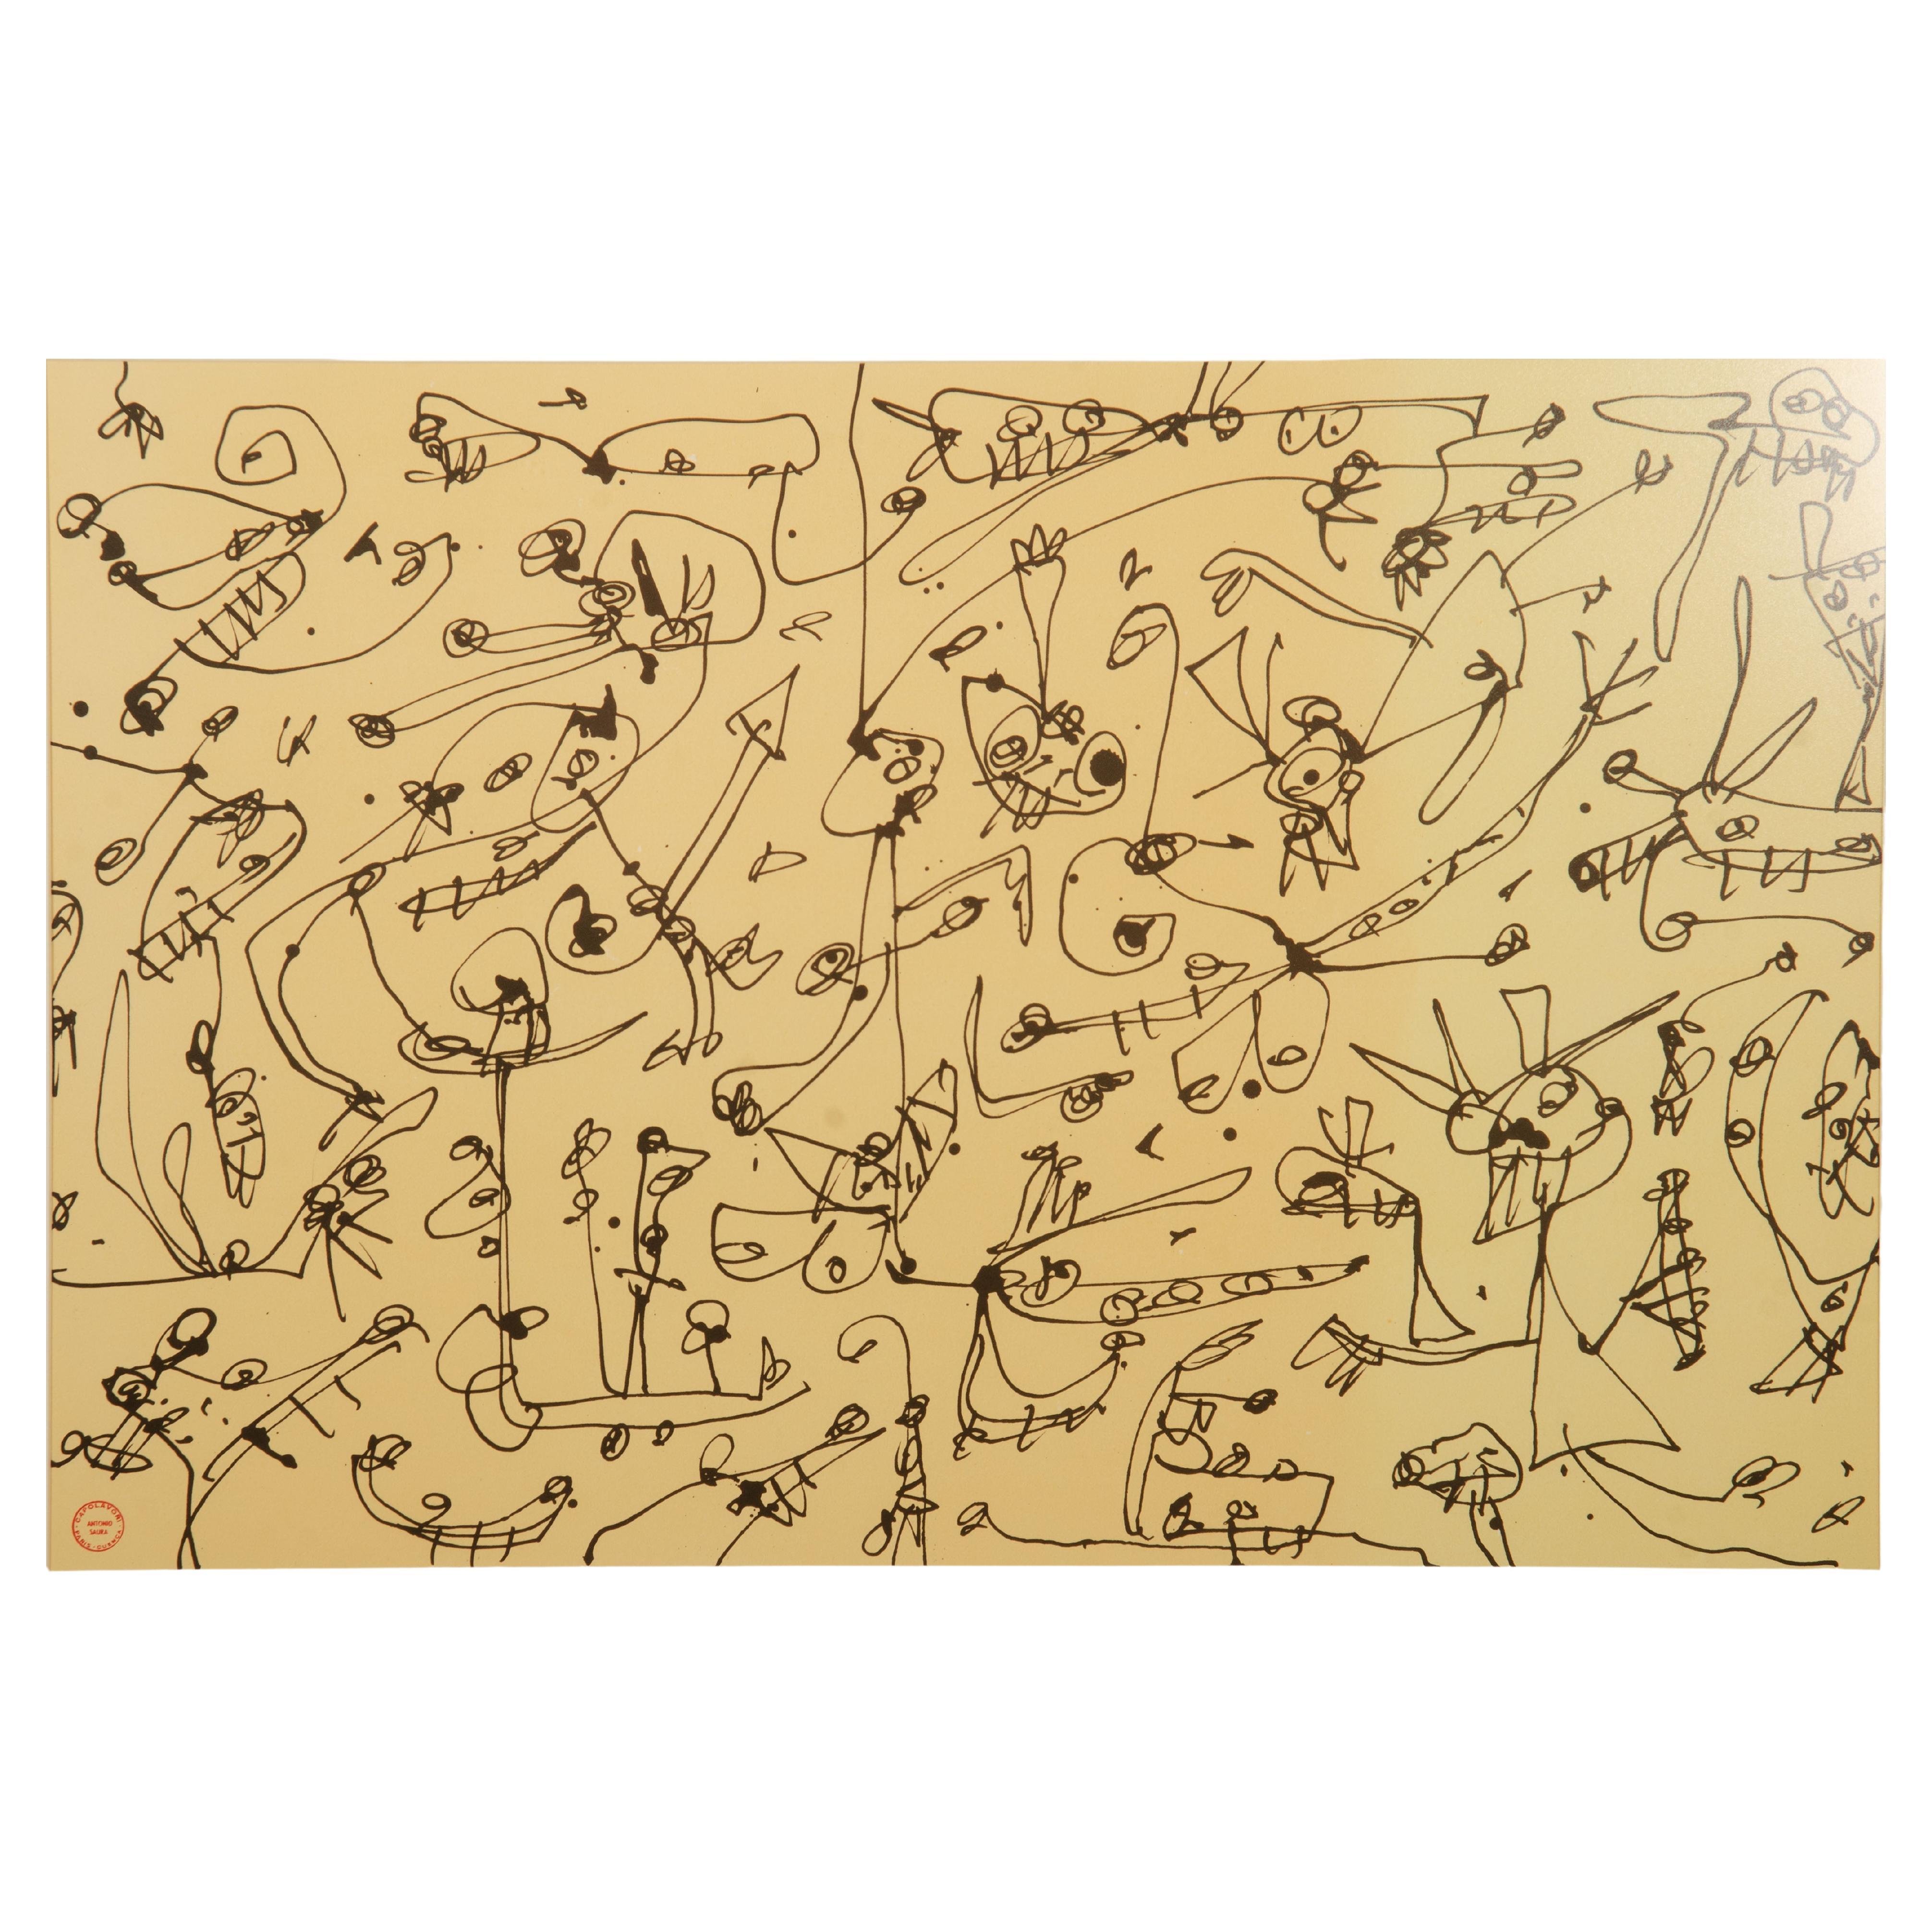 Antonio SAURA - Abierta 3 - Lithographie signée au crayon